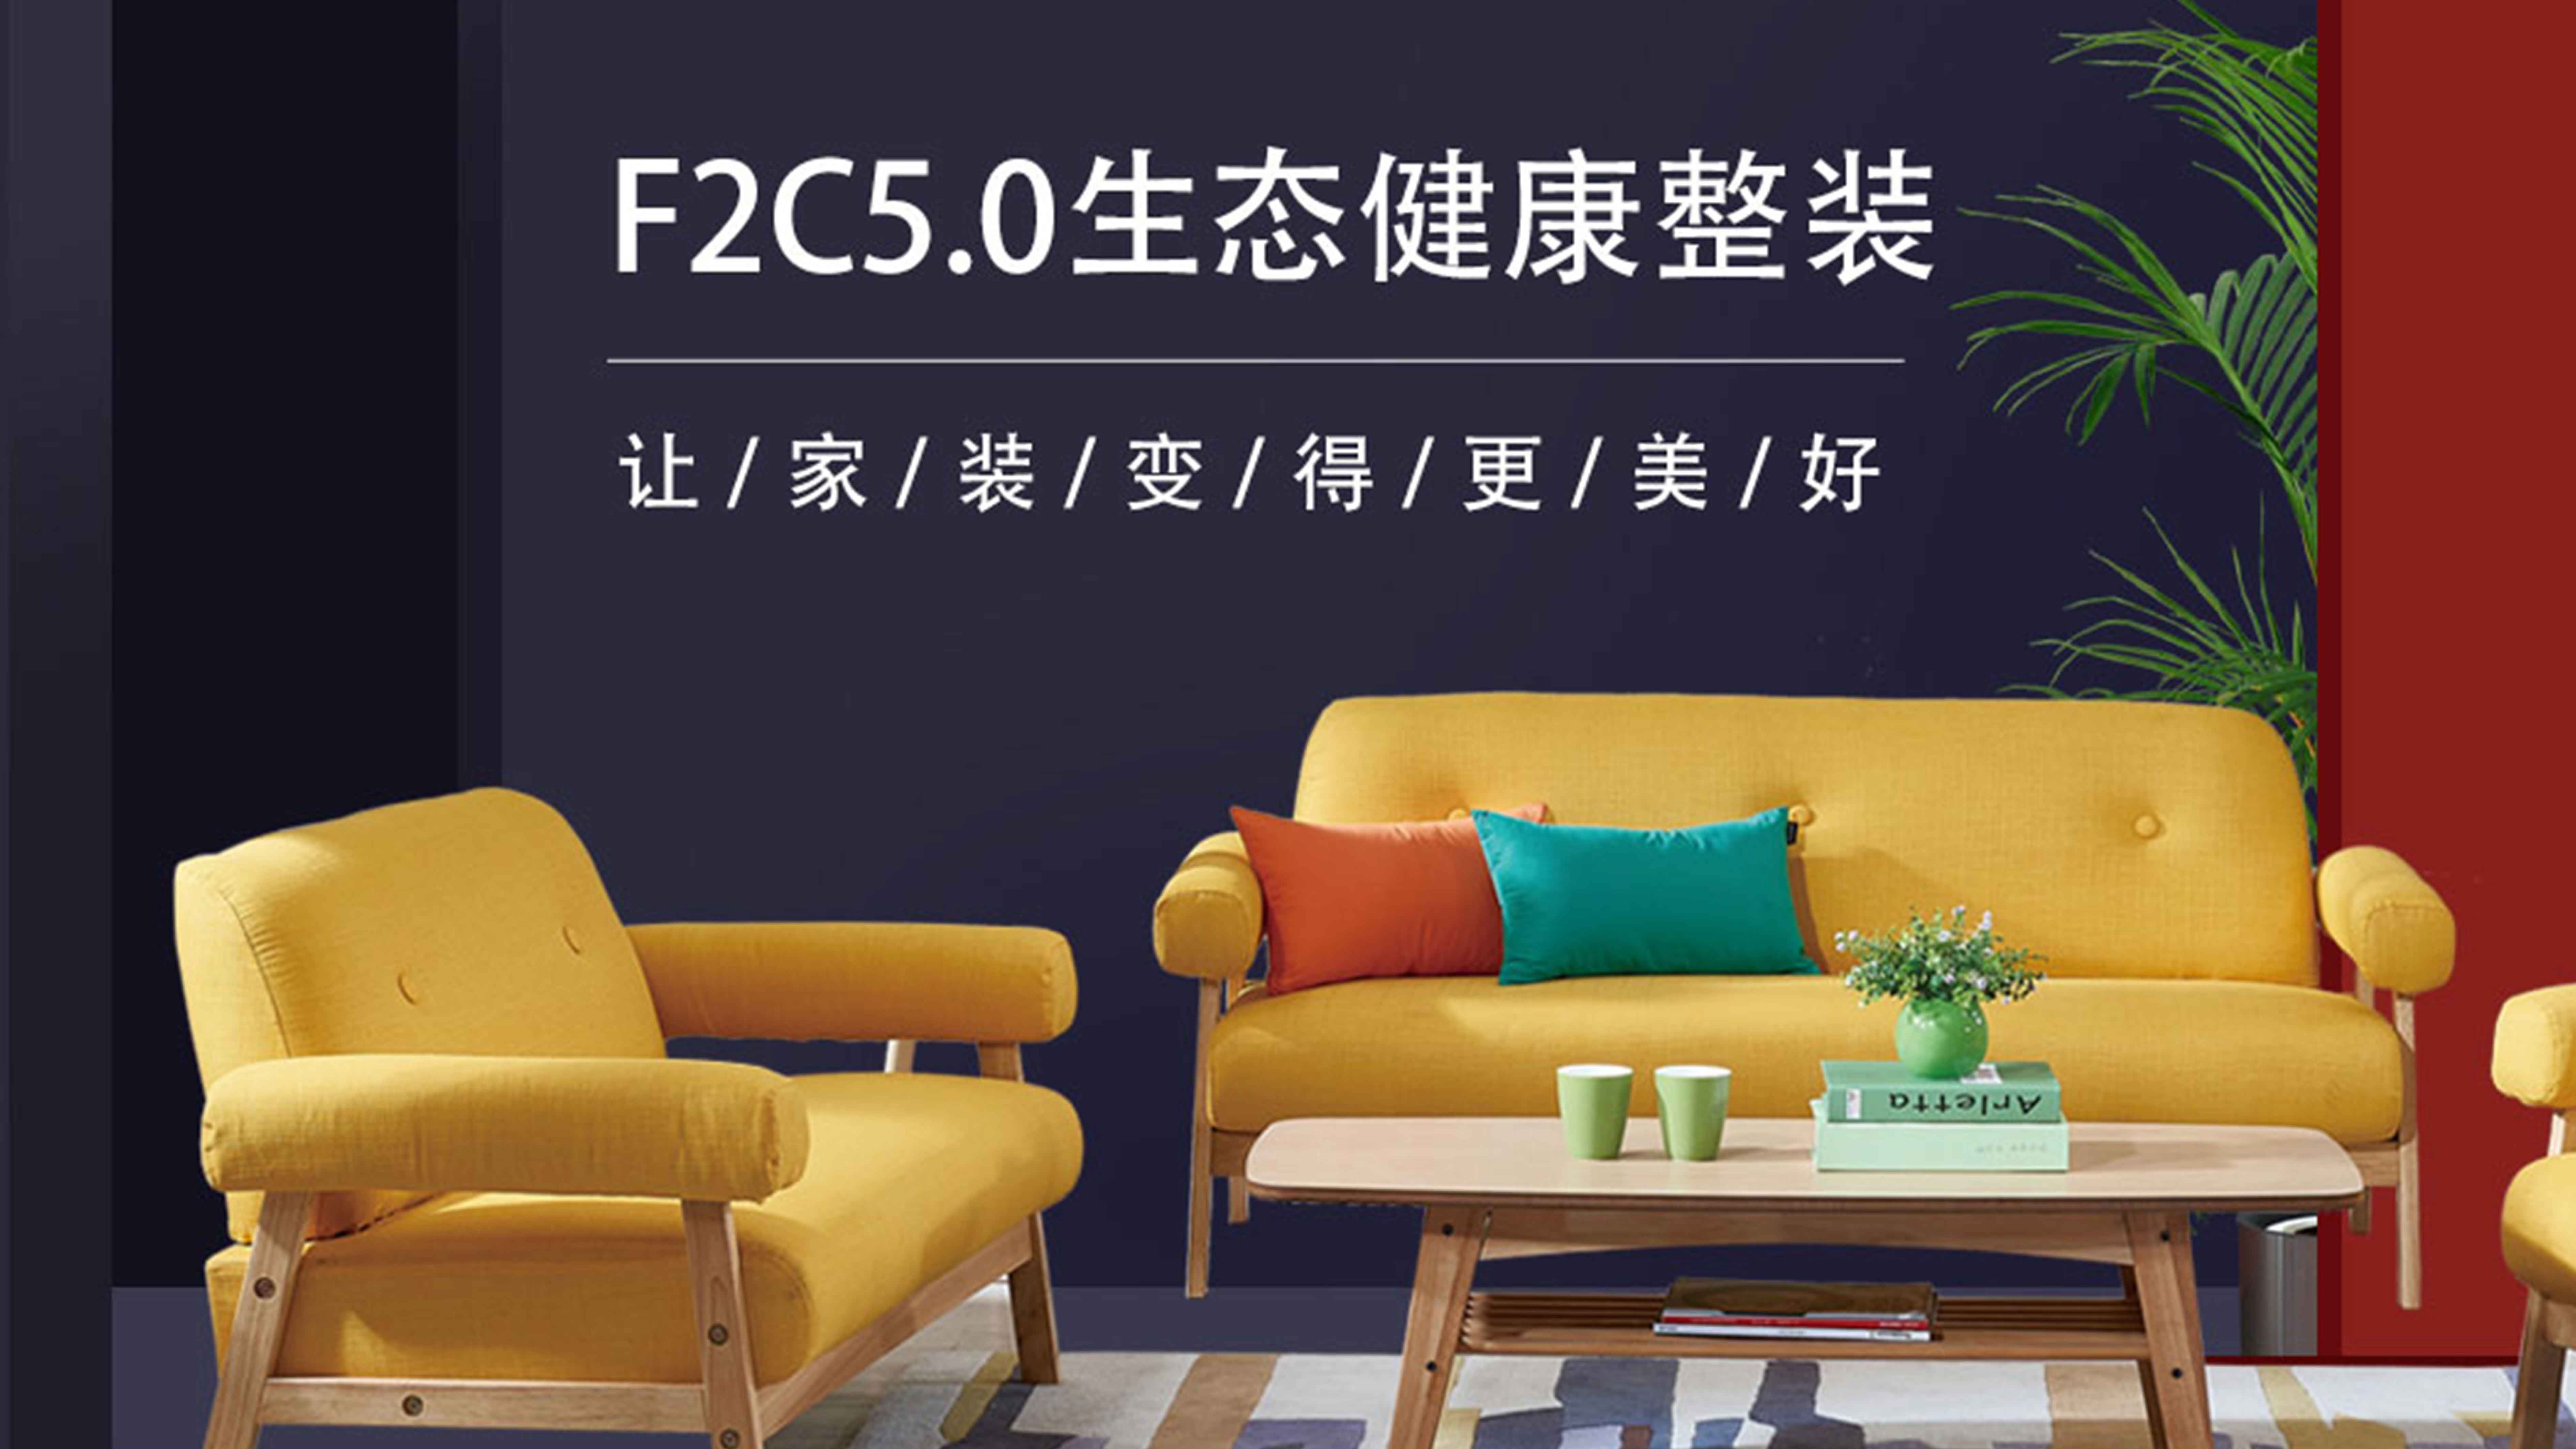 banner2  F2C 5.0生态健康家装